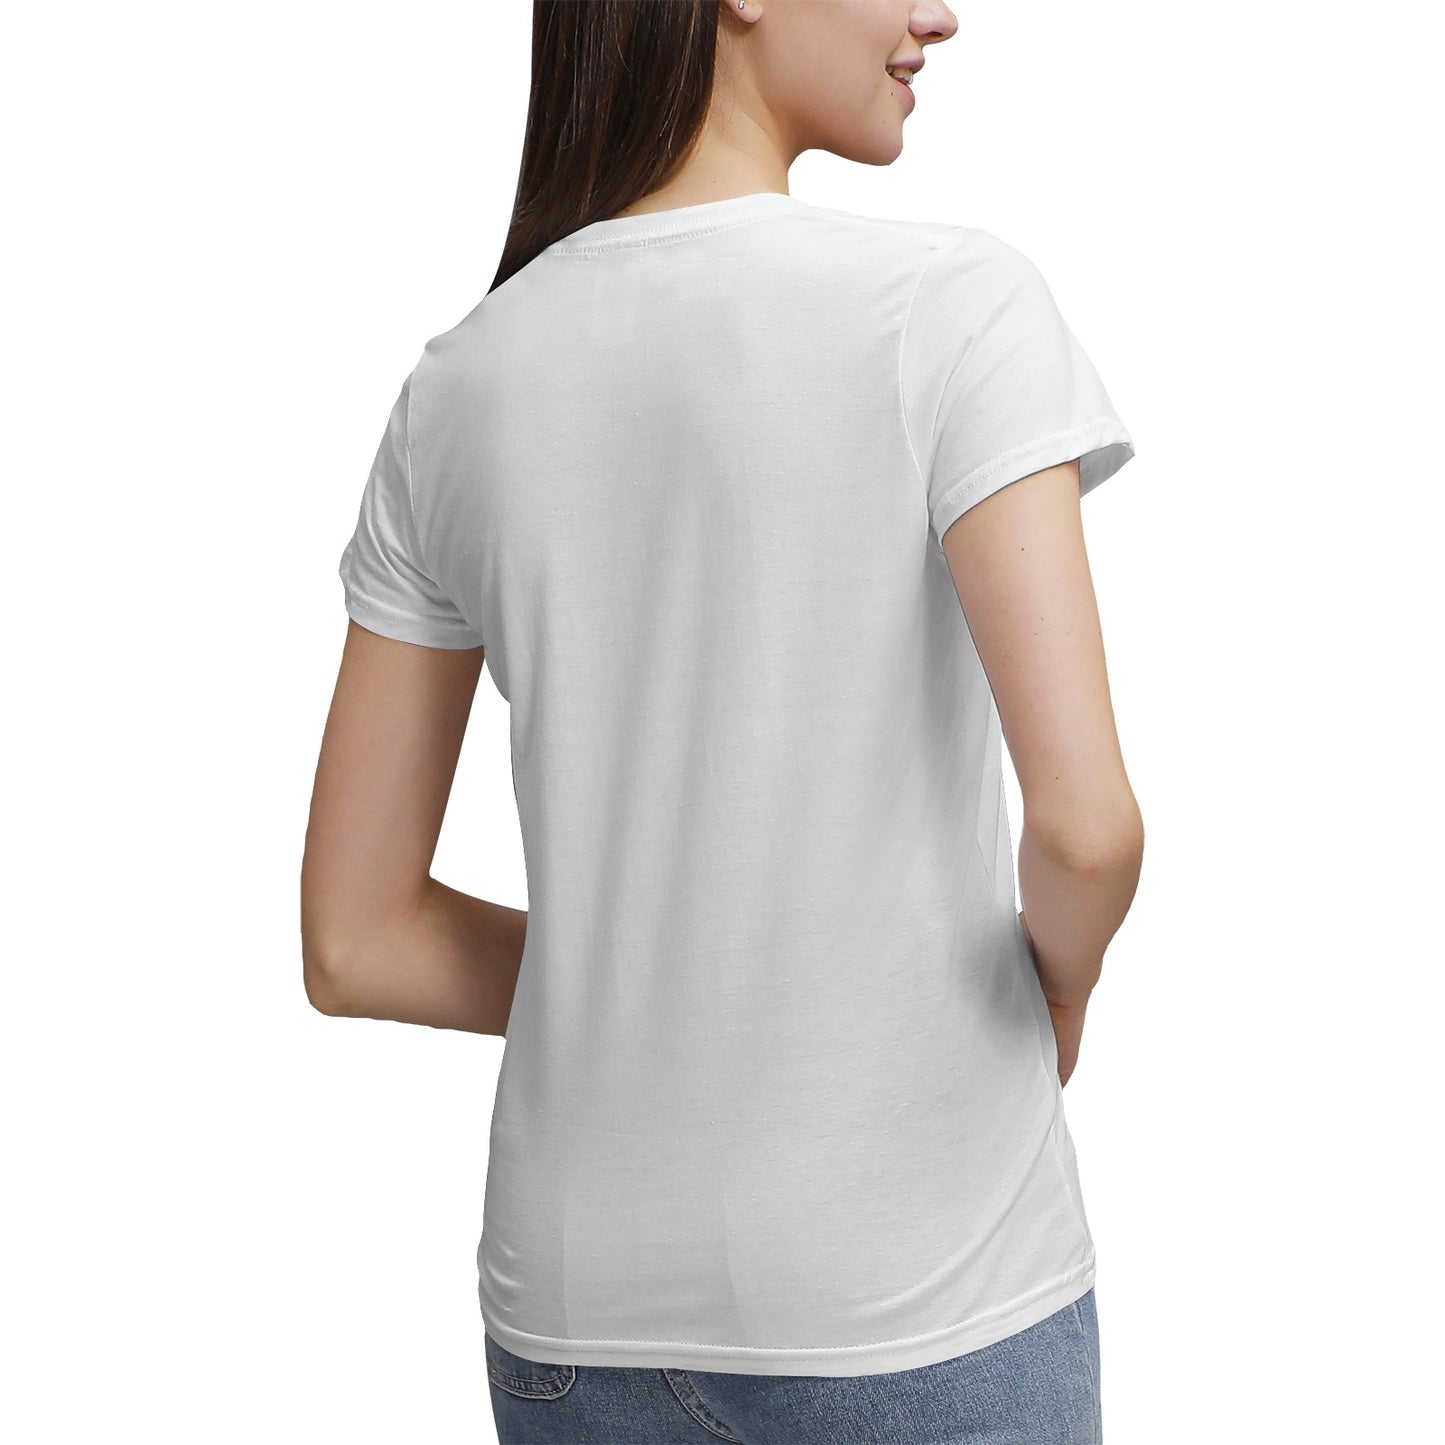 Women's 100% Cotton V‑Neck T‑shirt Pinoy pride